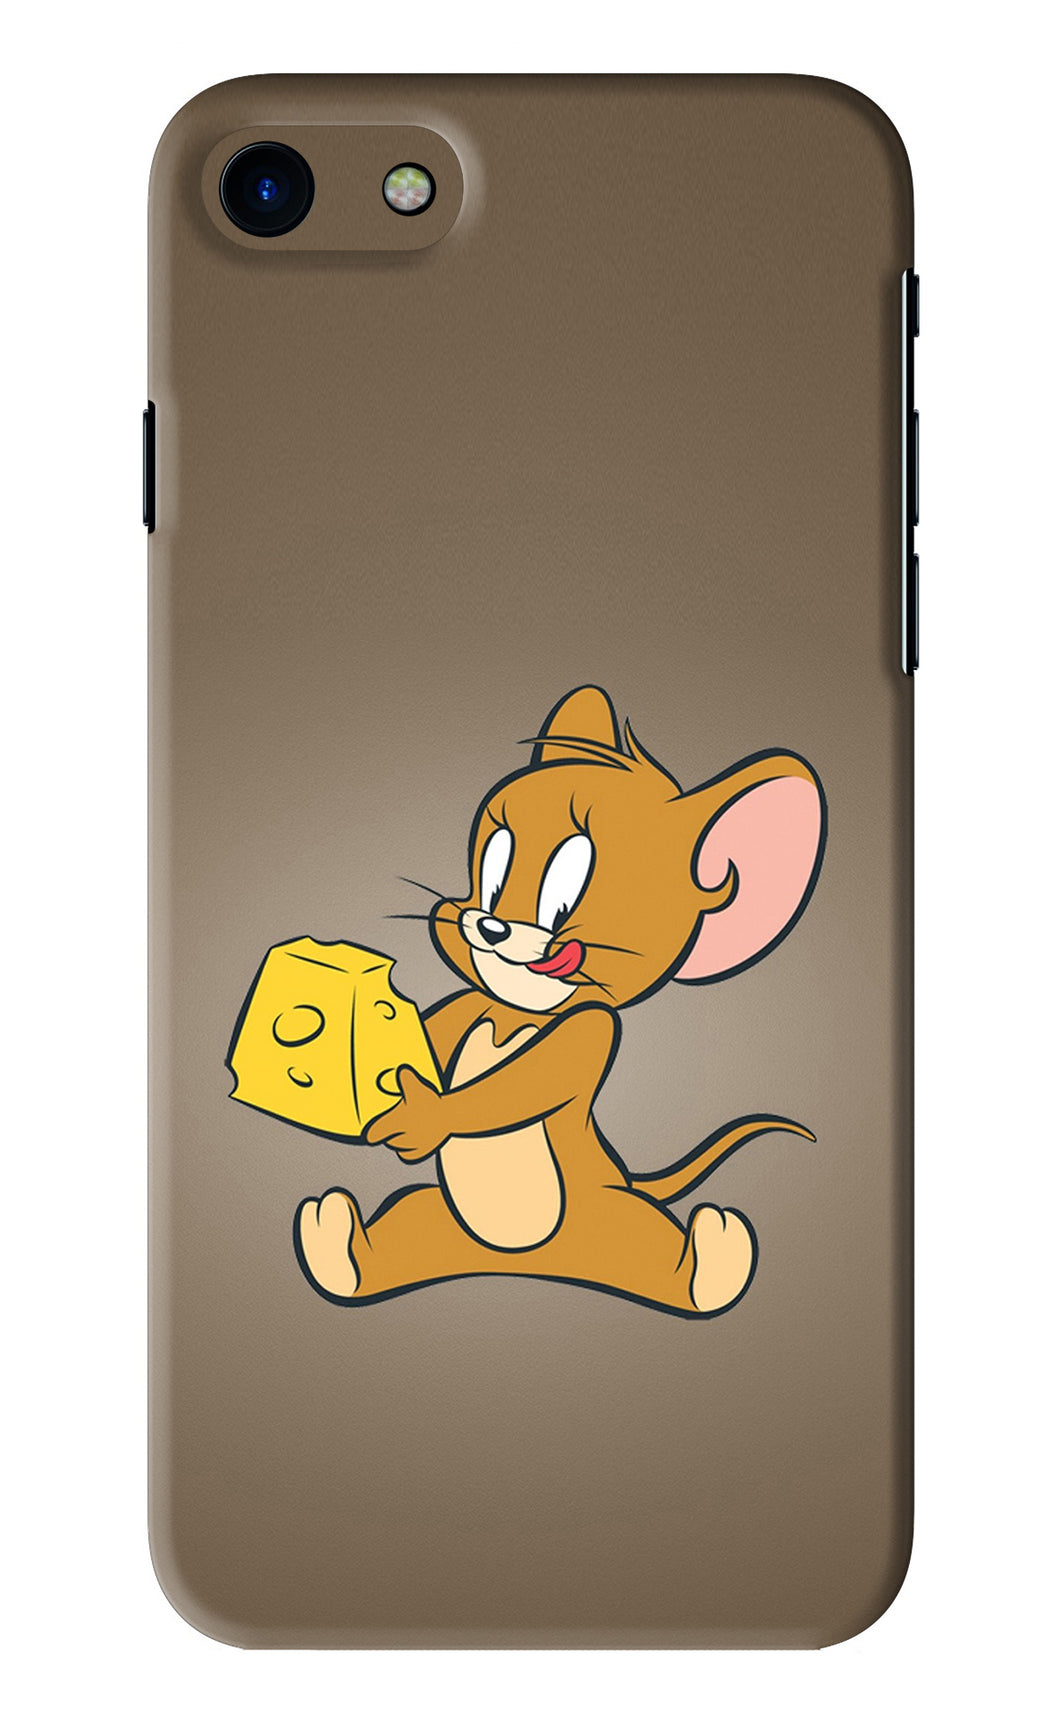 Jerry iPhone SE 2020 Back Skin Wrap